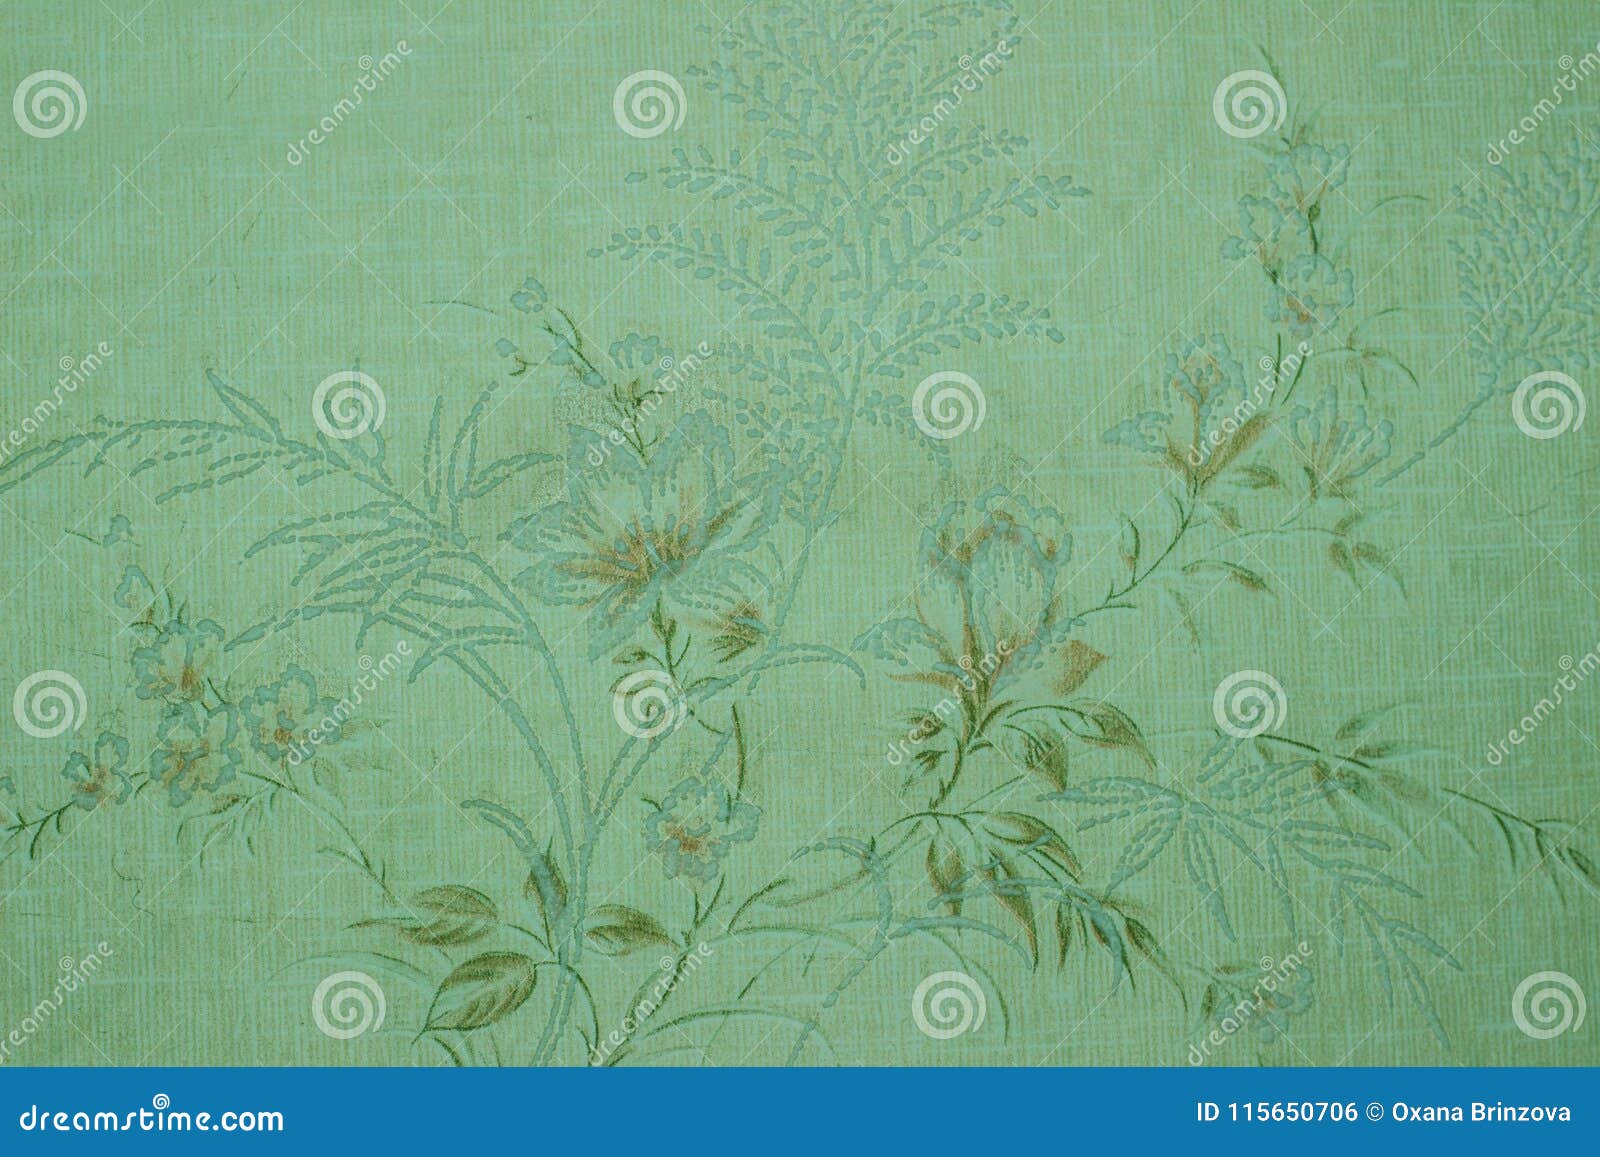 Green Vintage Wallpaper Images  Free Download on Freepik